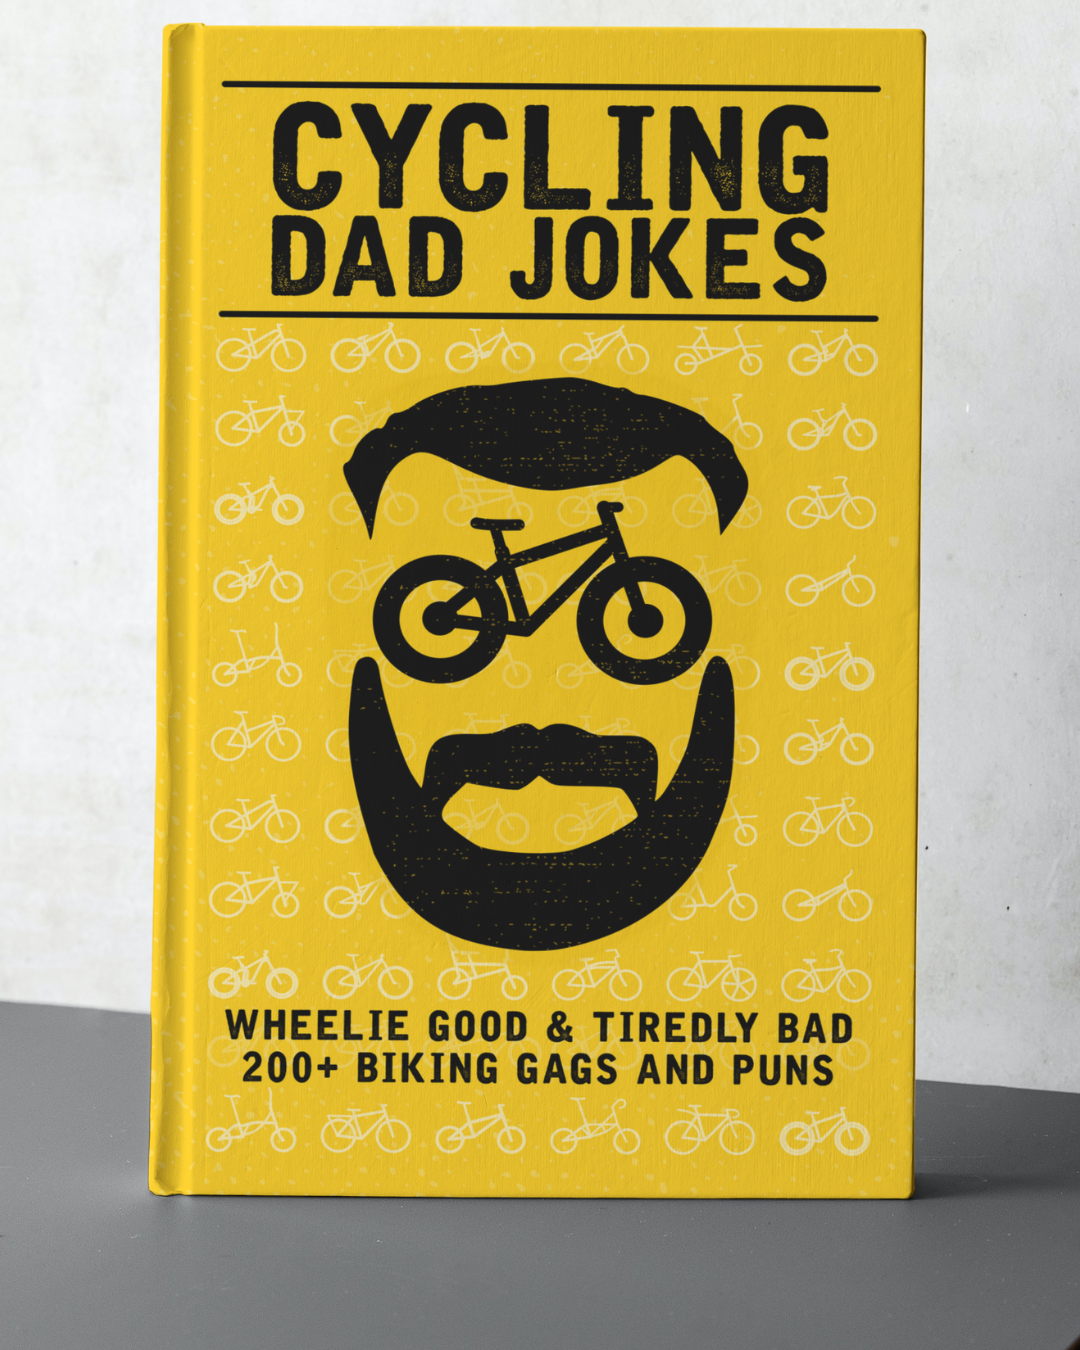 Cycling dad jokes book